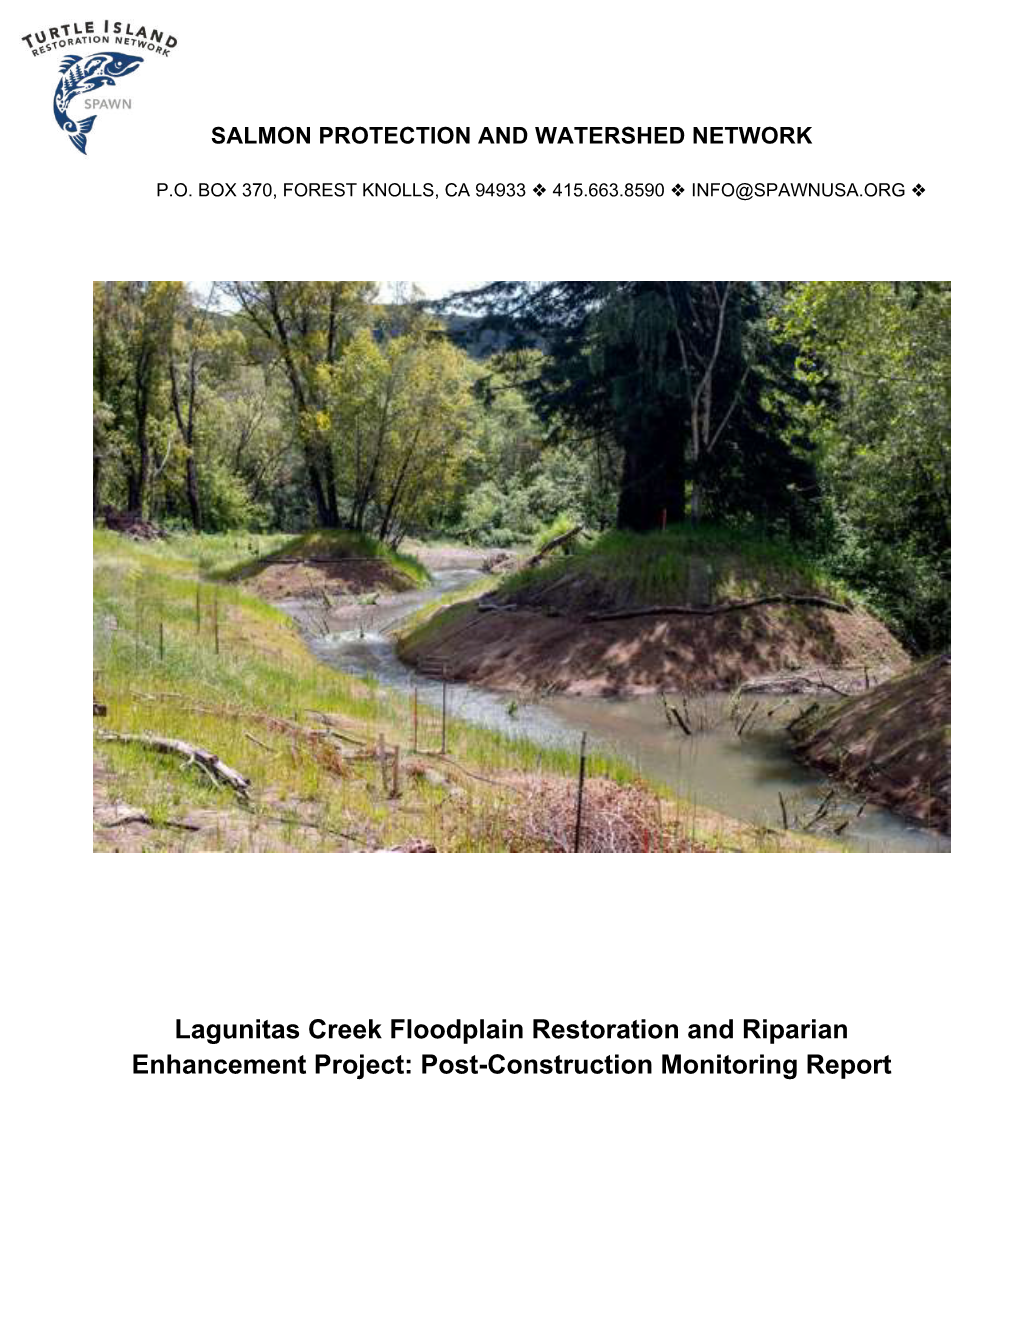 Lagunitas Creek Floodplain Restoration and Riparian Enhancement Project: Post-Construction Monitoring Report